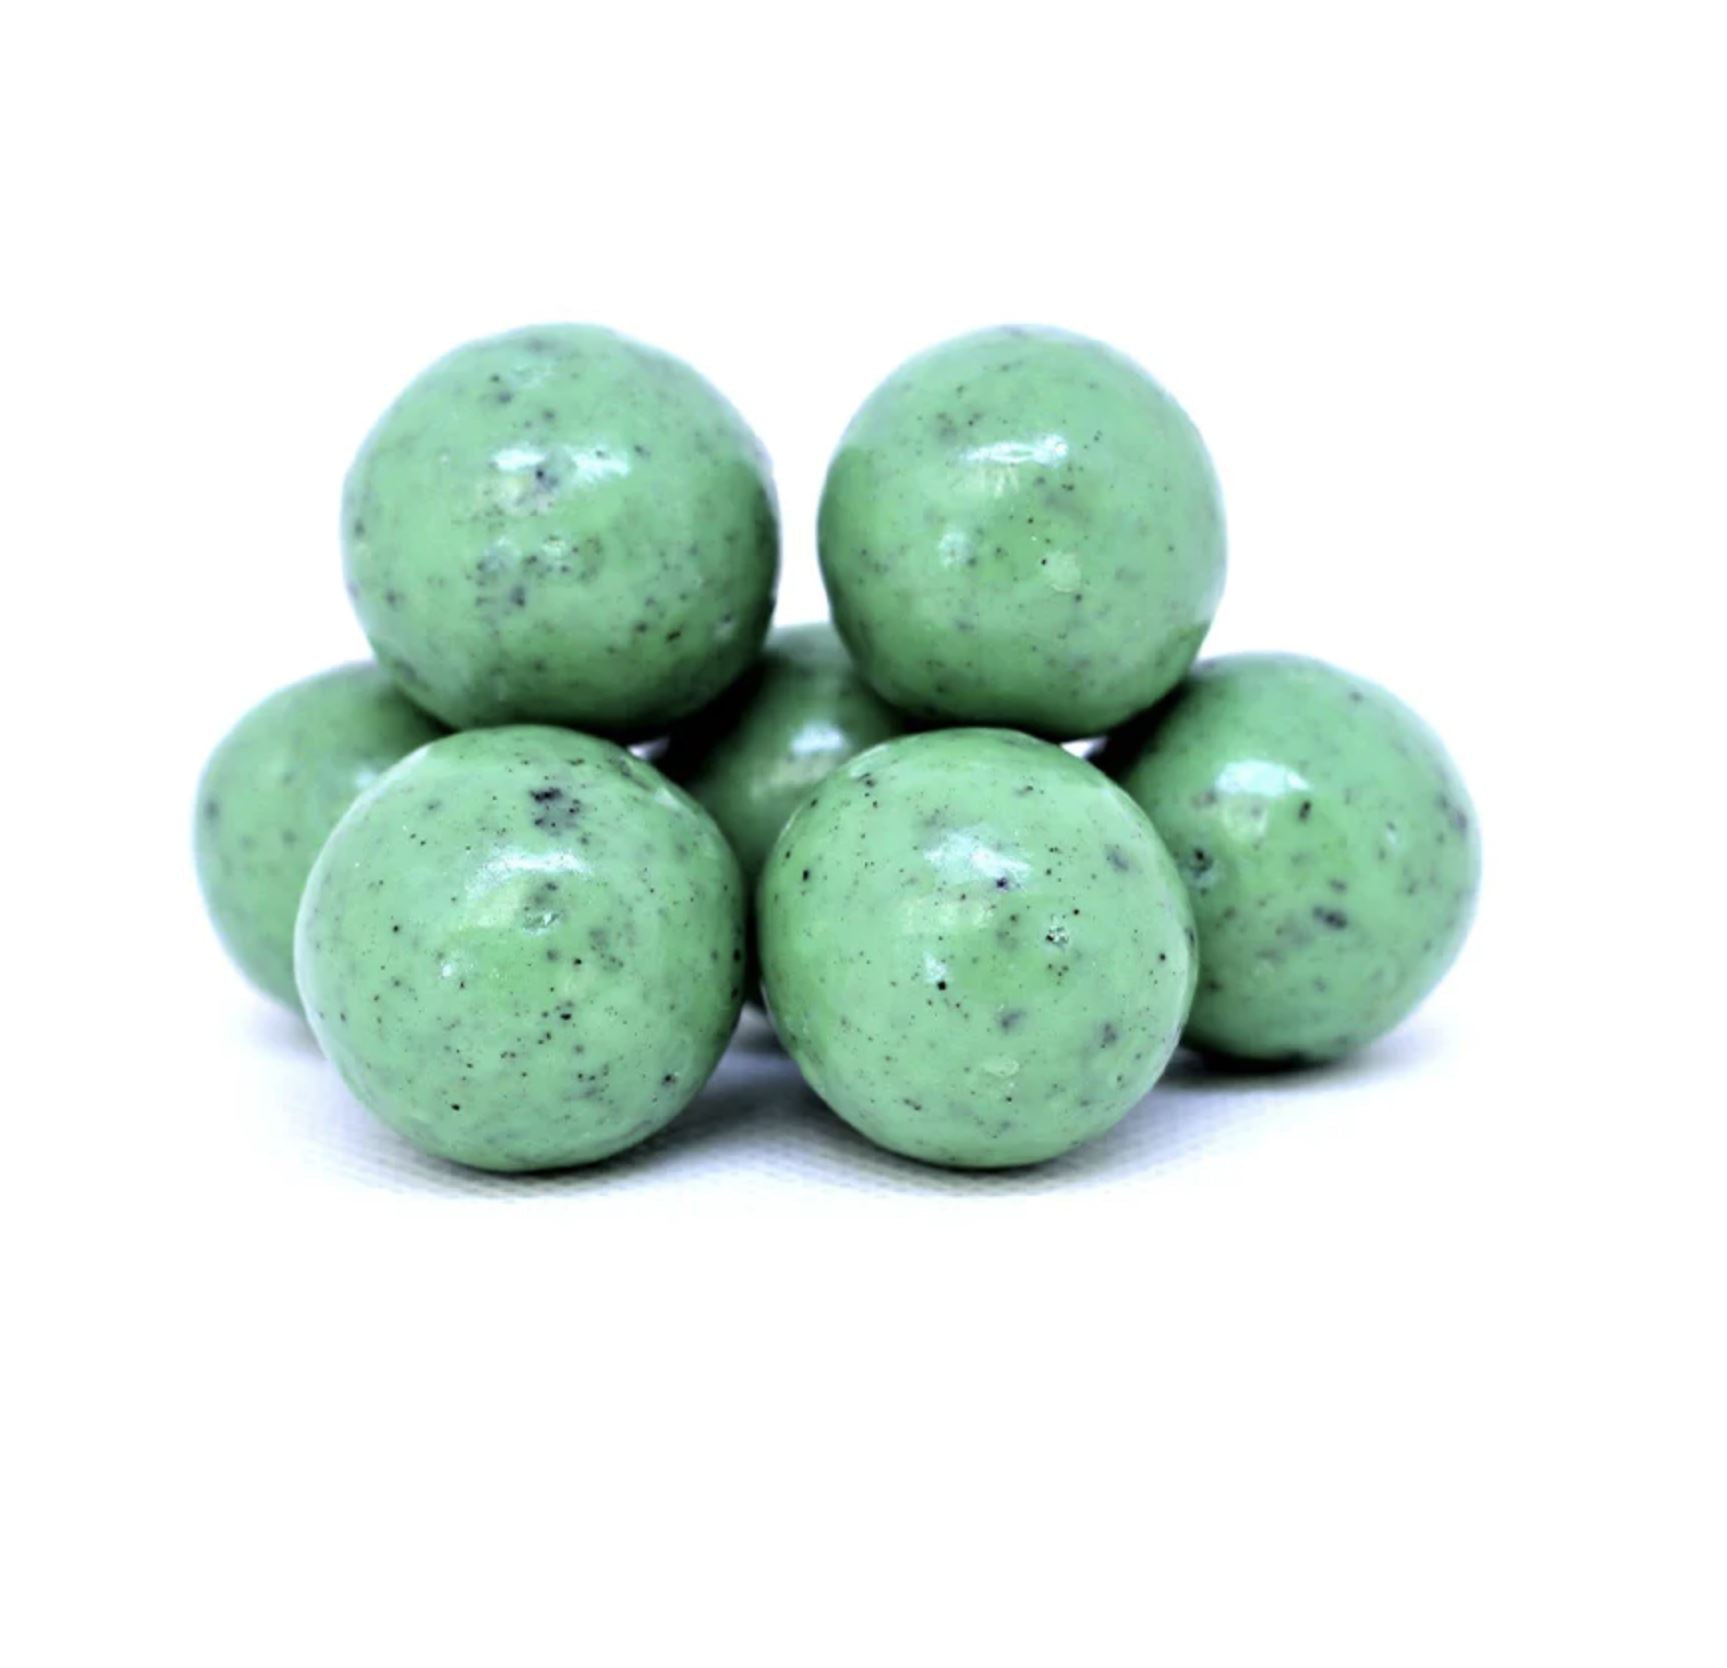 Mint Cookies Malted Milk Balls